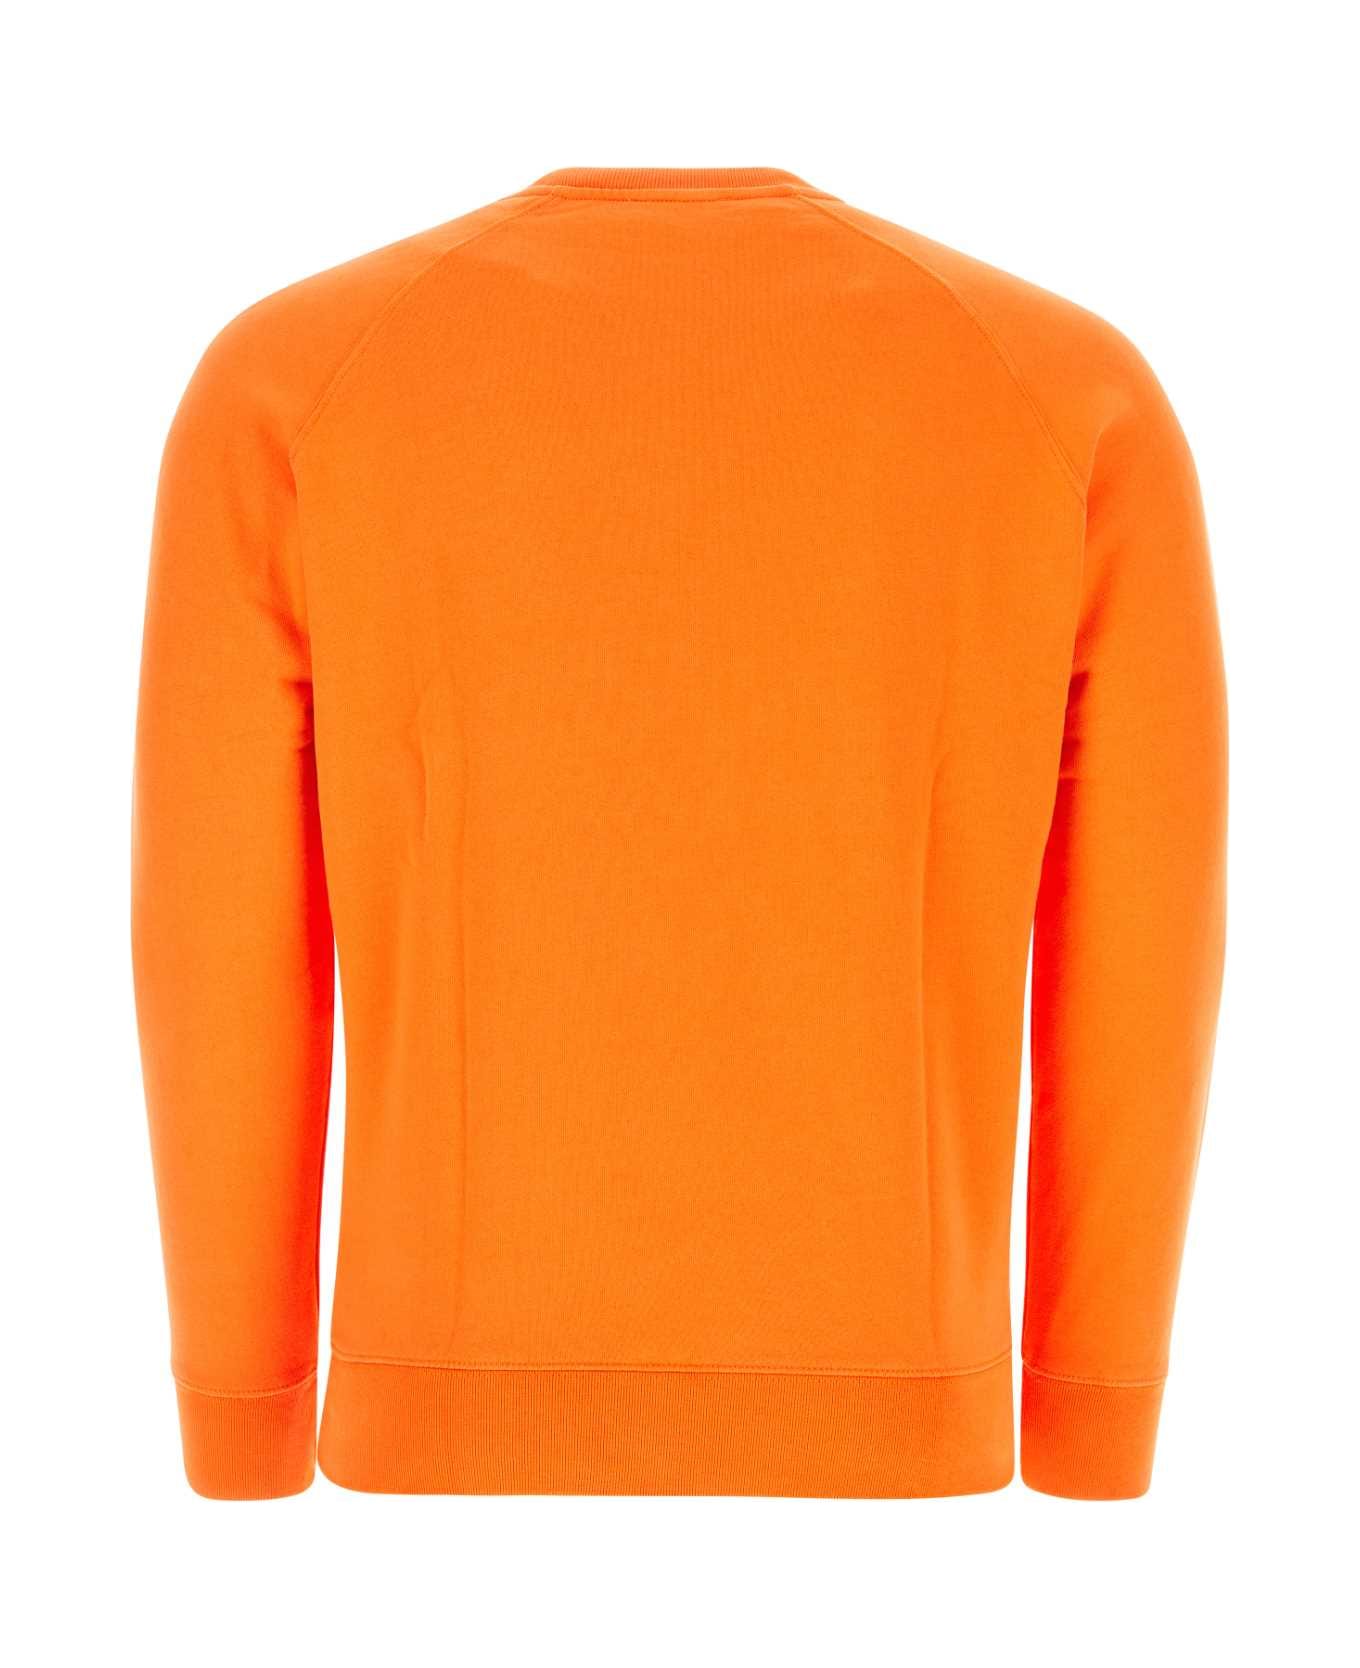 Maison Kitsuné Orange Cotton Sweatshirt - P851 フリース